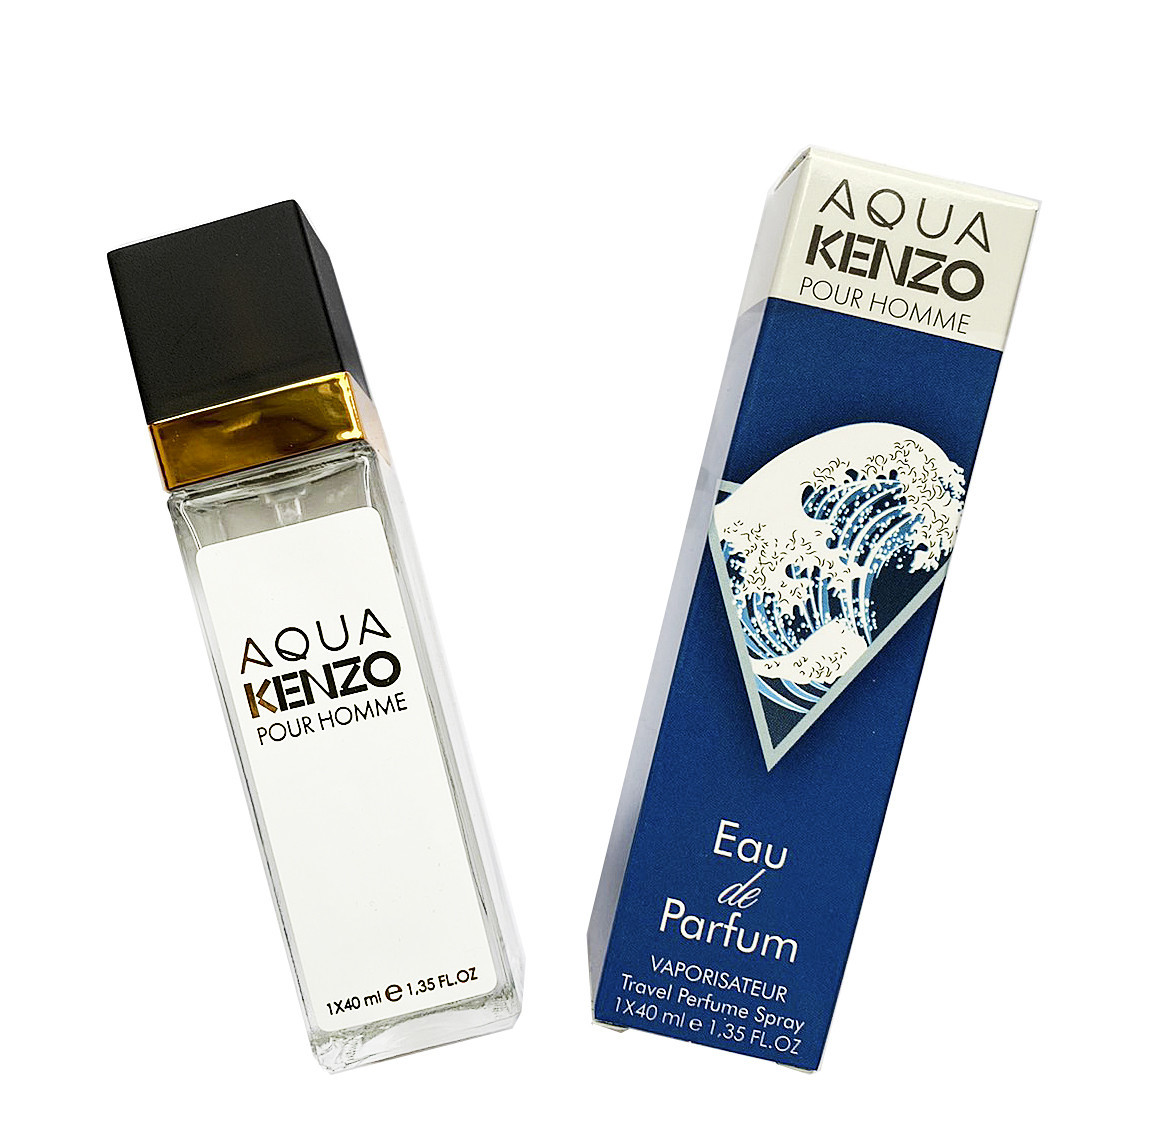 Kenzo Aqua pour homme - Travel Size 40 мл